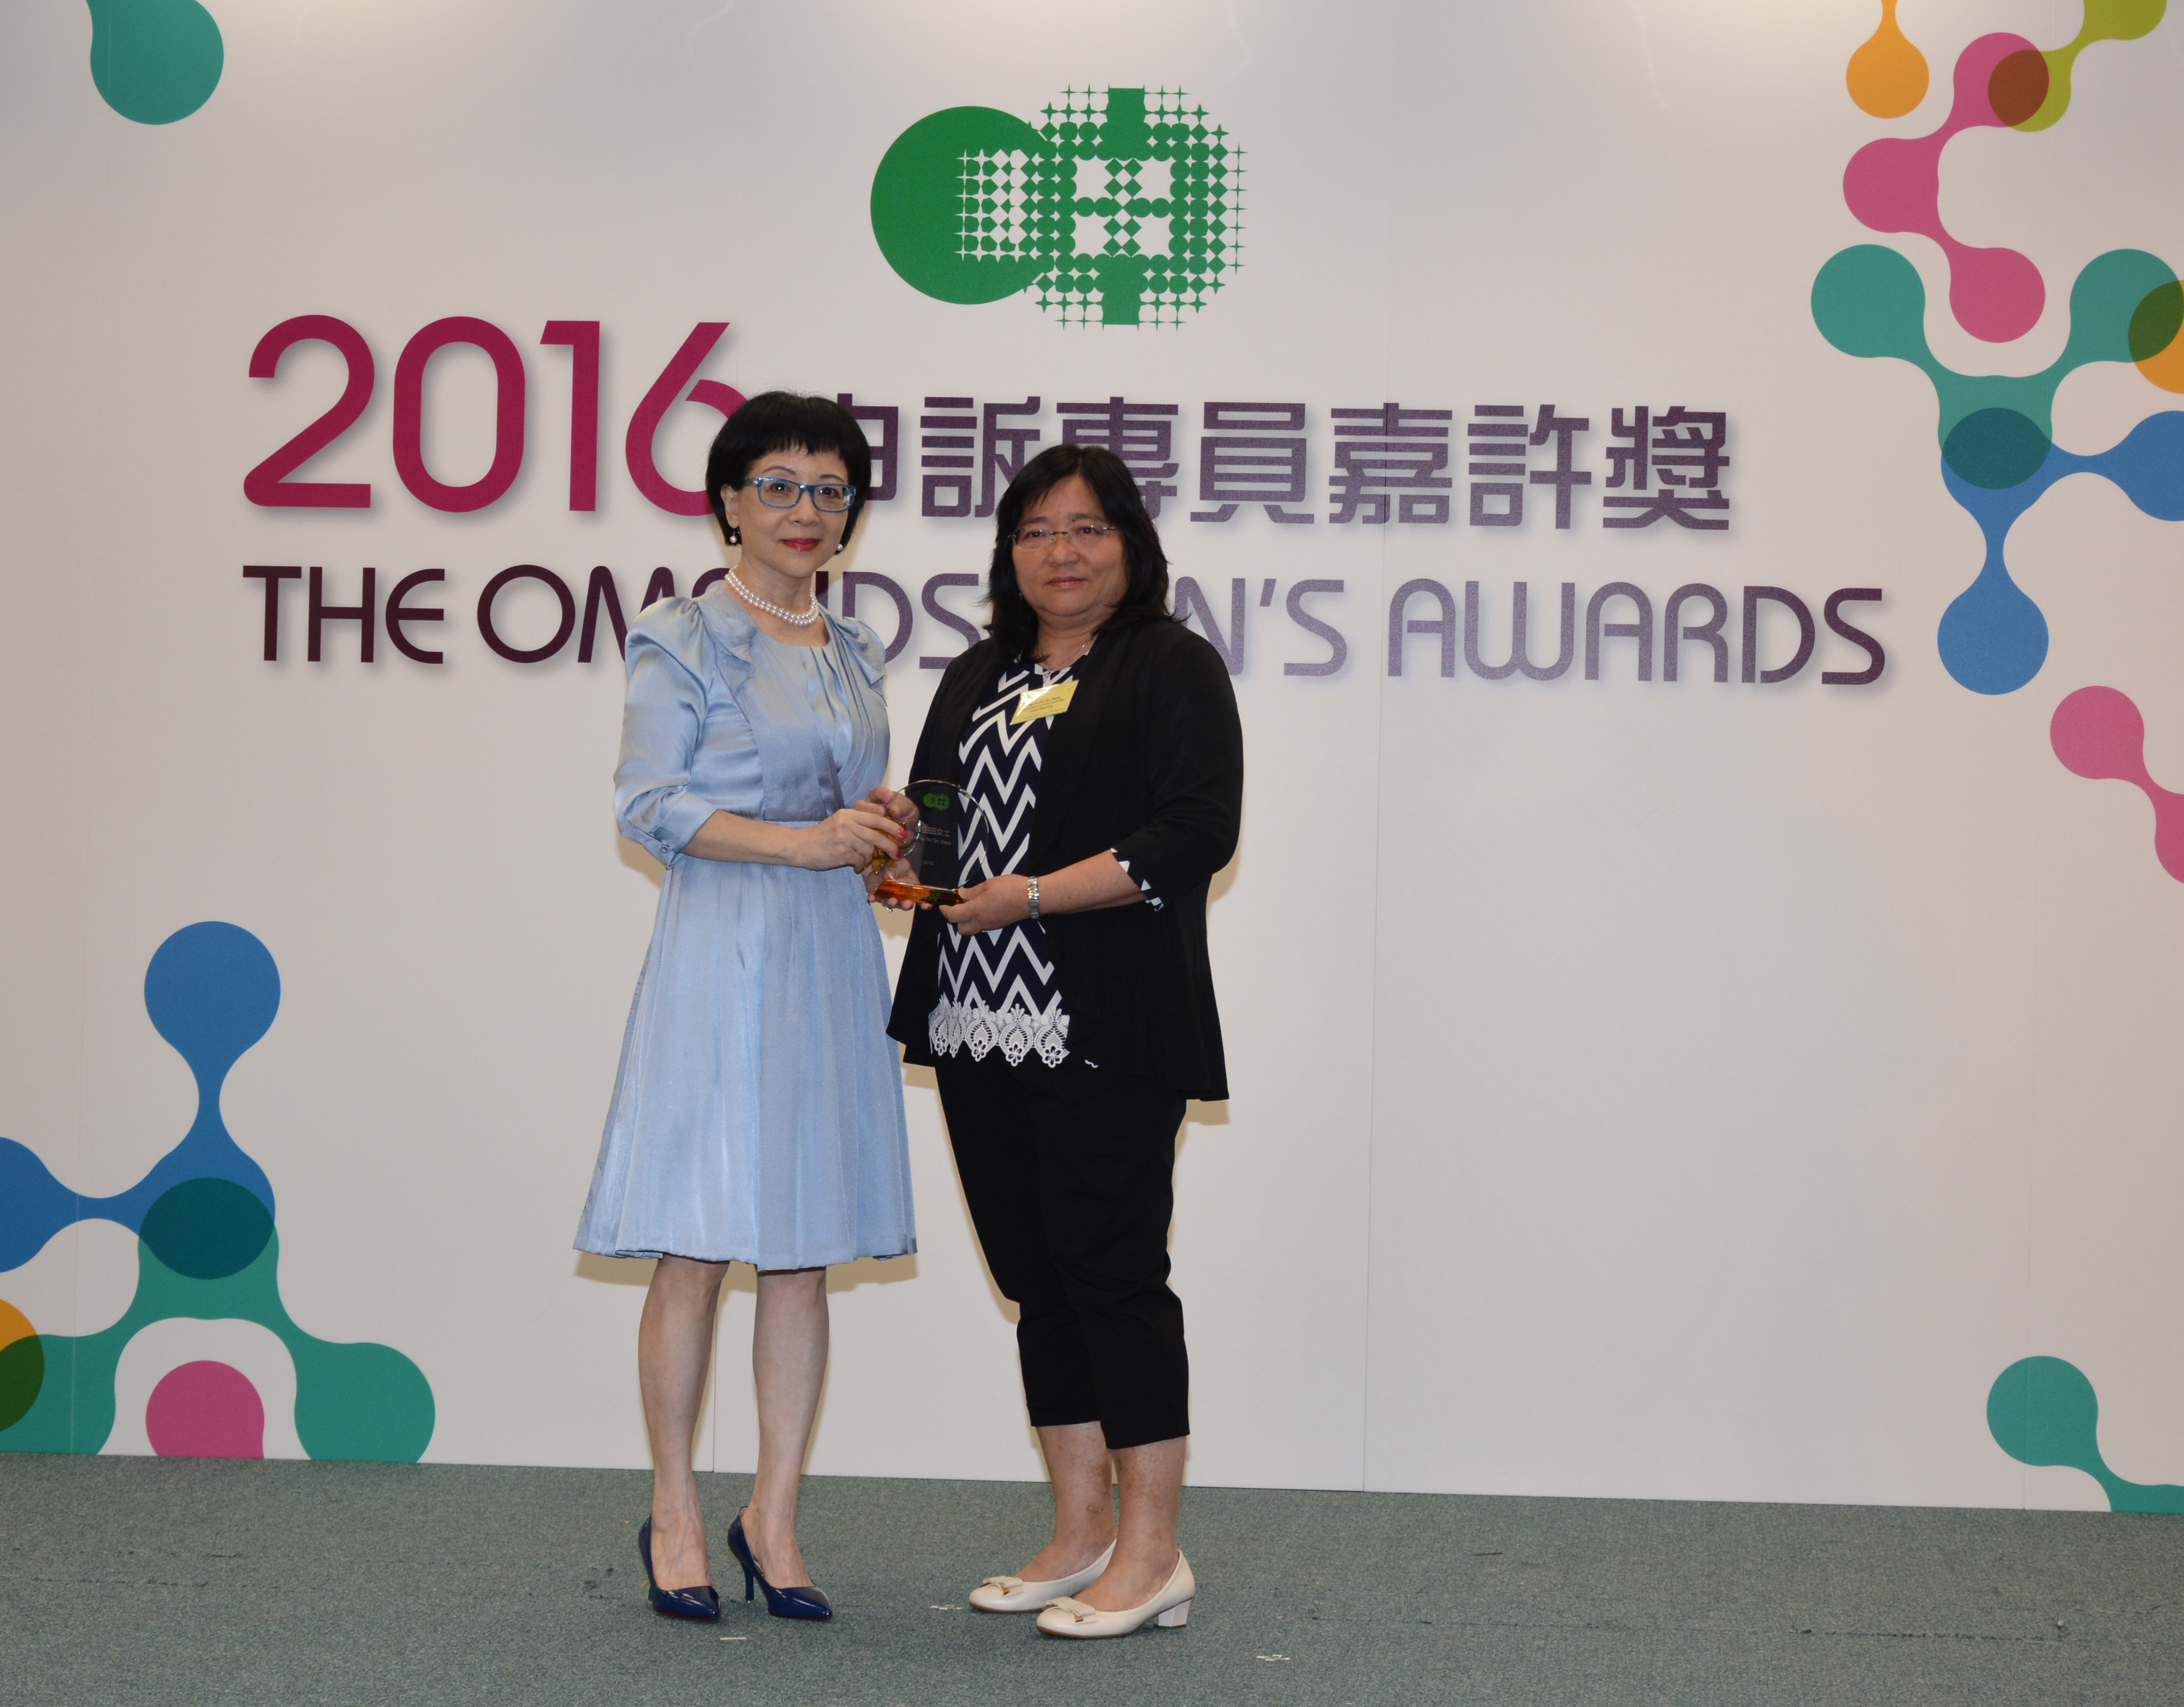 The Ombudsman's Awards 2016